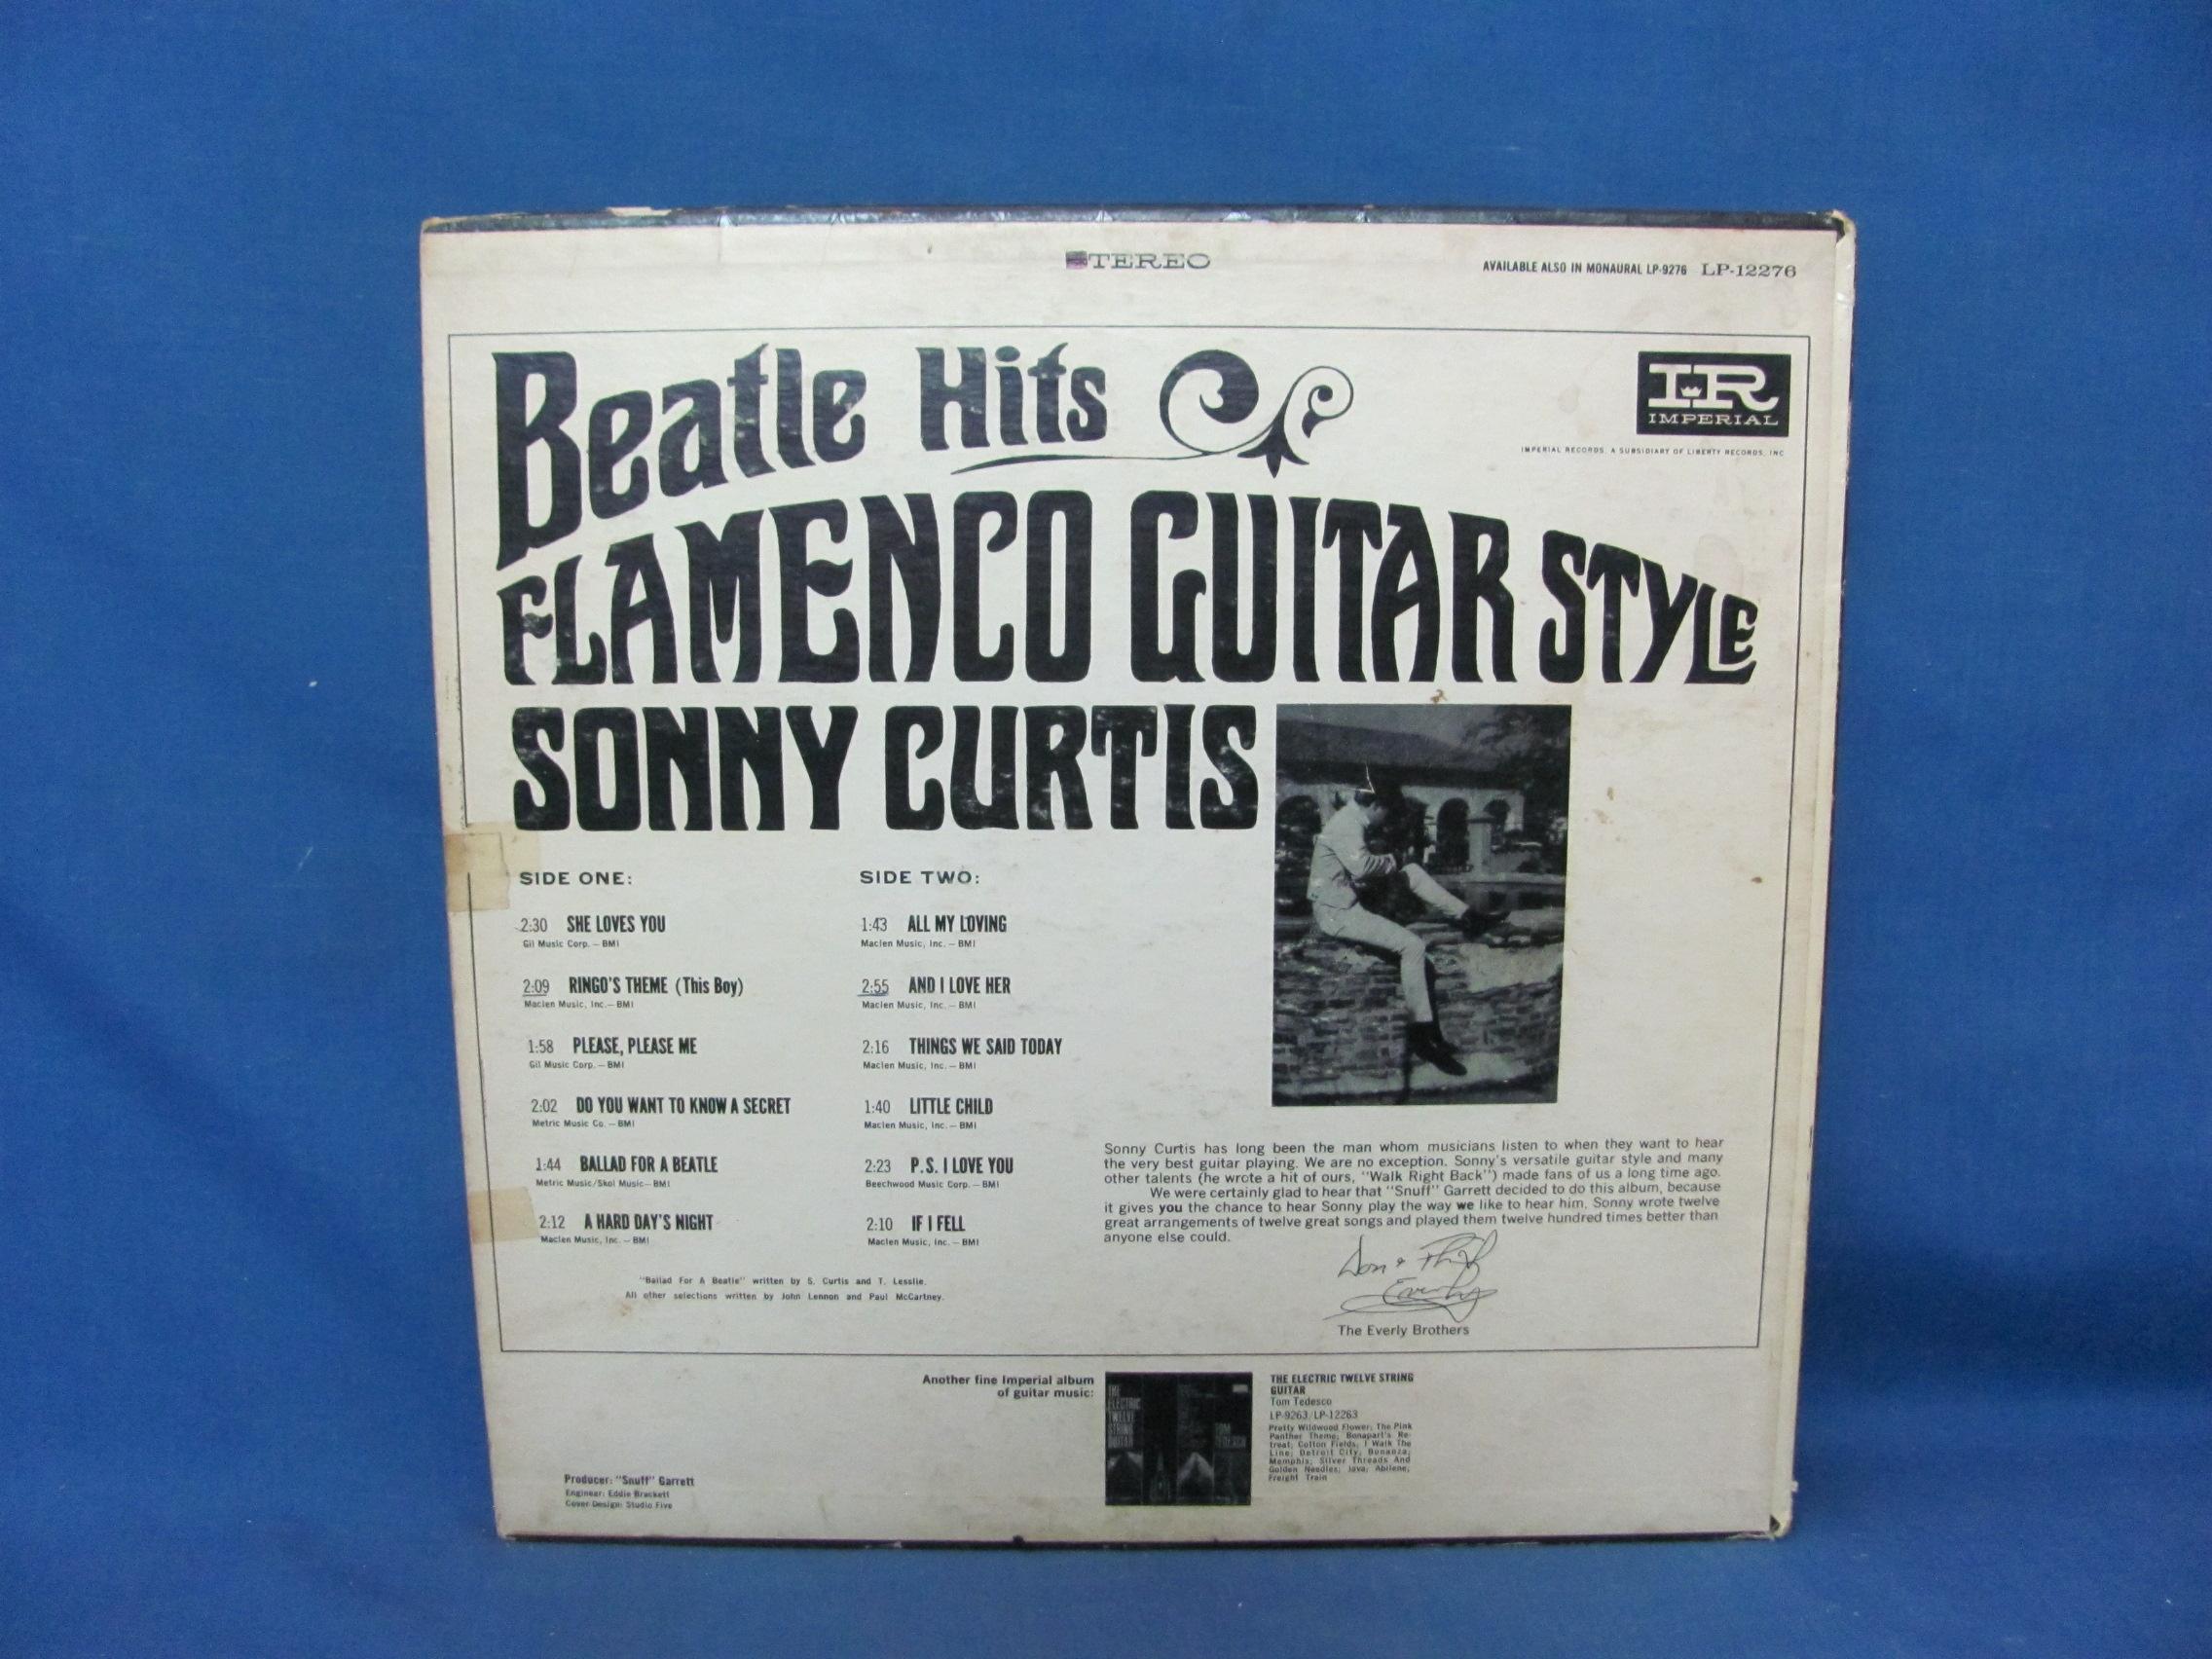 Sonny Curtis 'Beatles Hits of Flamenco Guitar Style' Vinyl LP Record